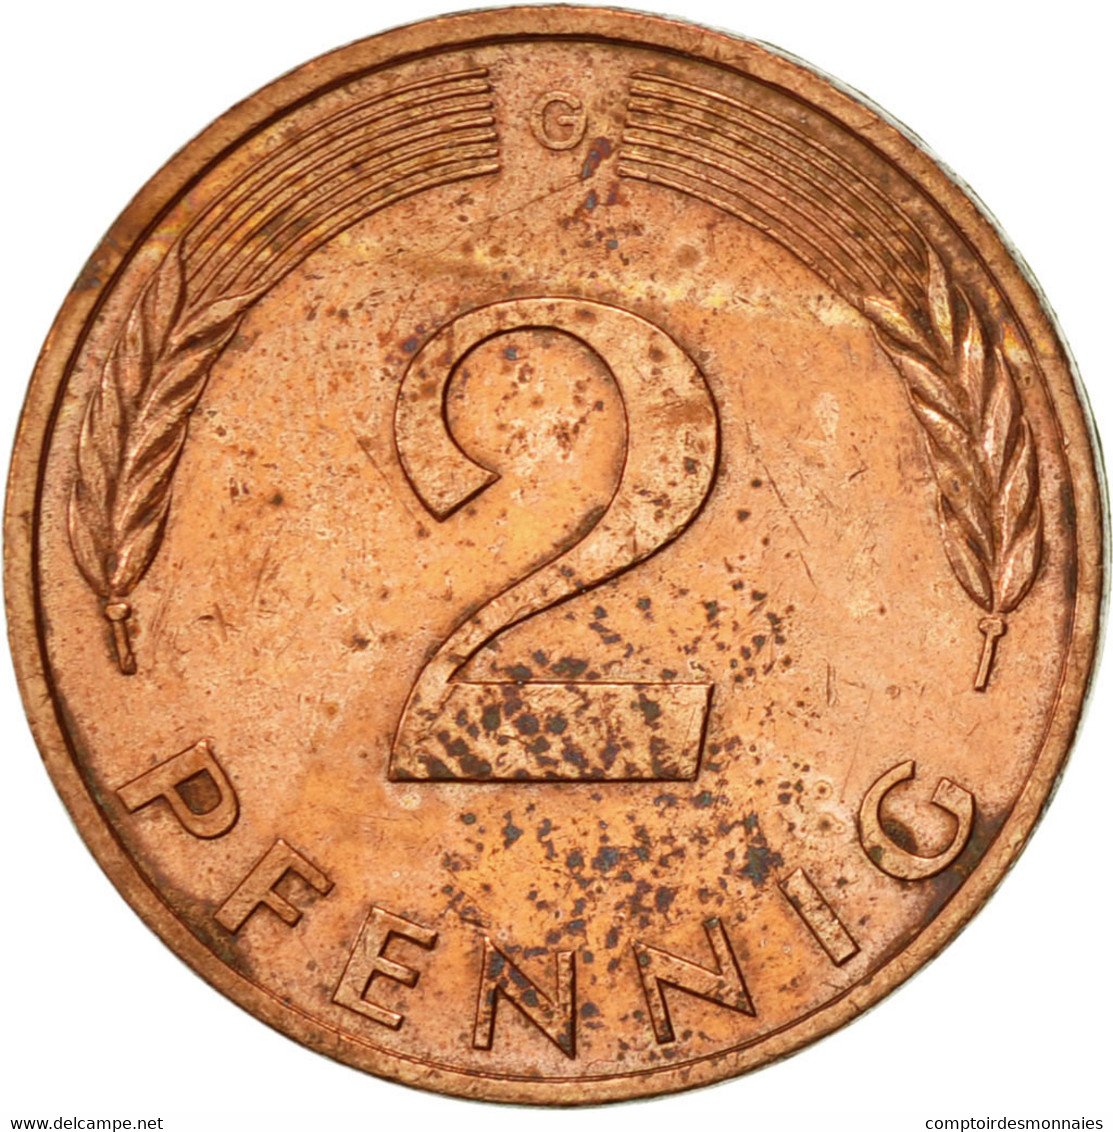 Monnaie, République Fédérale Allemande, 2 Pfennig, 1992, Karlsruhe, TTB+ - 2 Pfennig